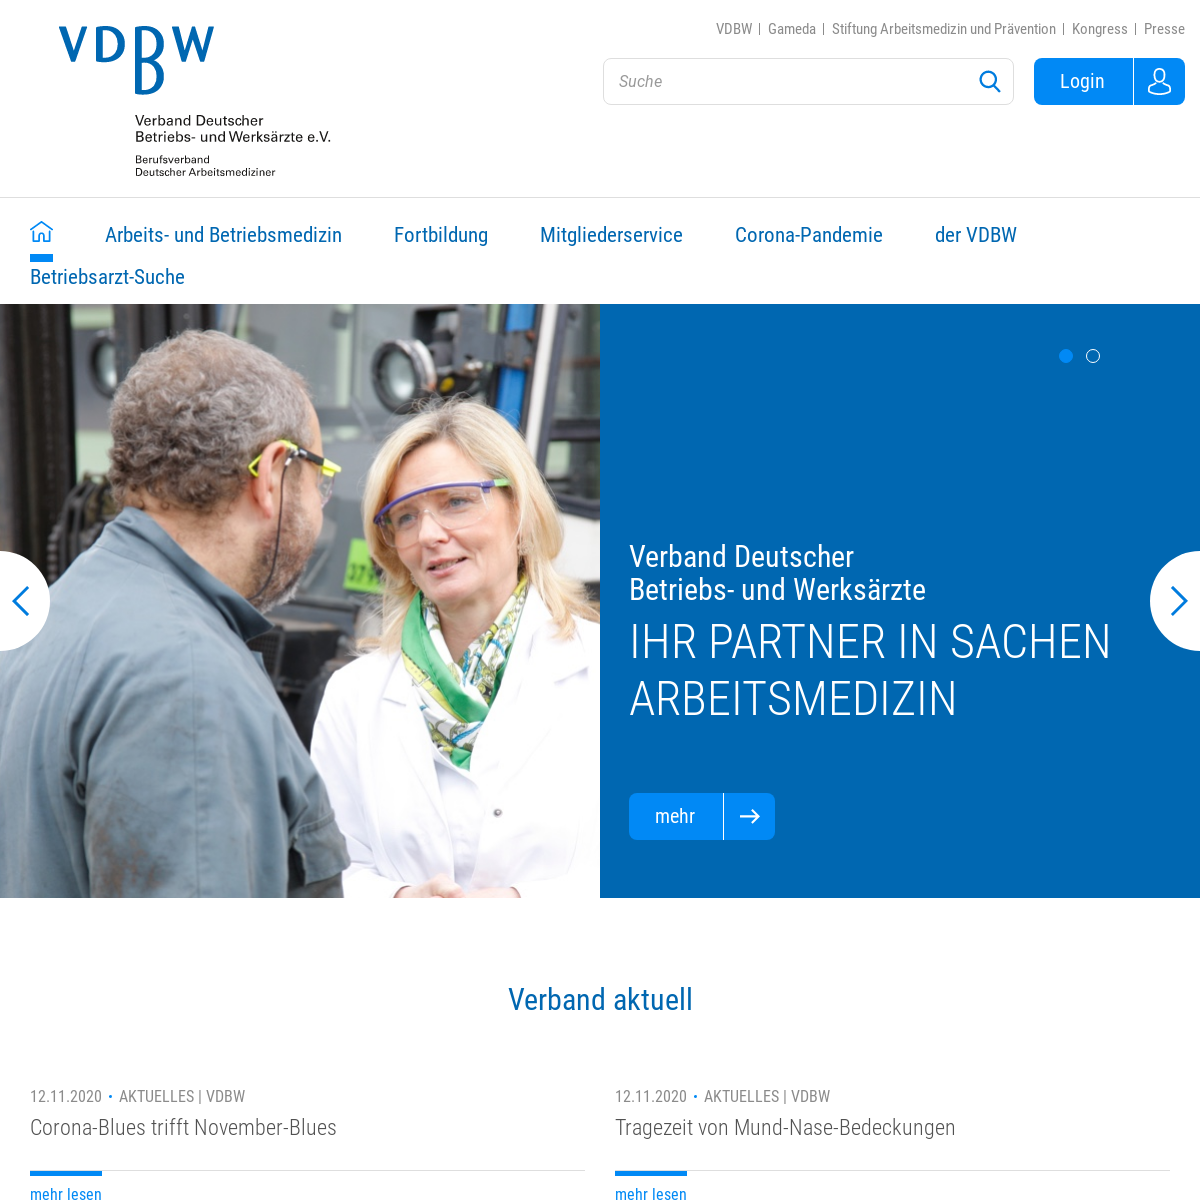 A complete backup of vdbw.de